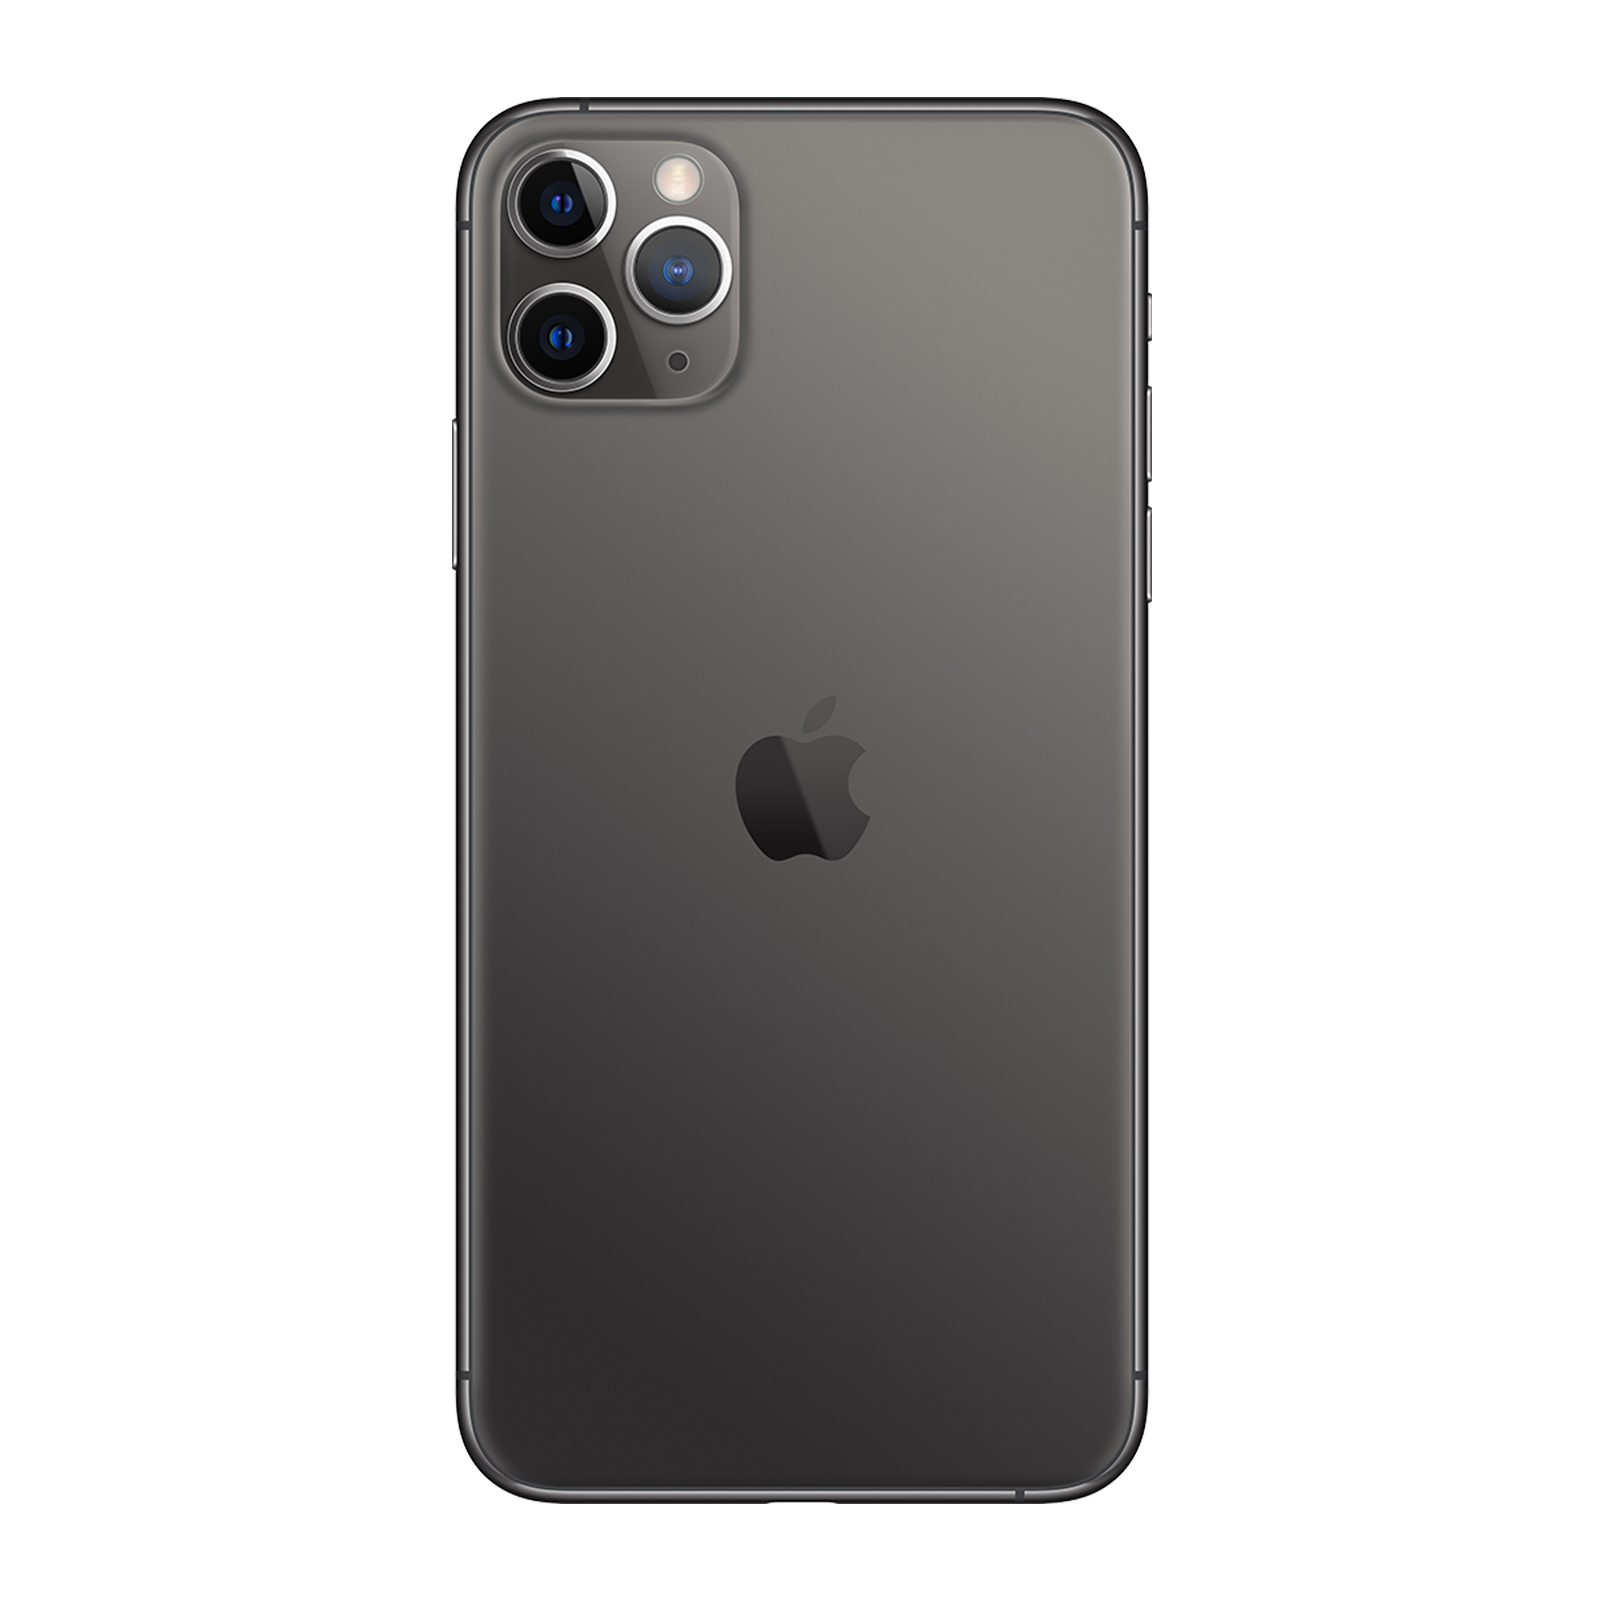 Apple iPhone 11 Pro Max 256GB Space Grey Good - Verizon